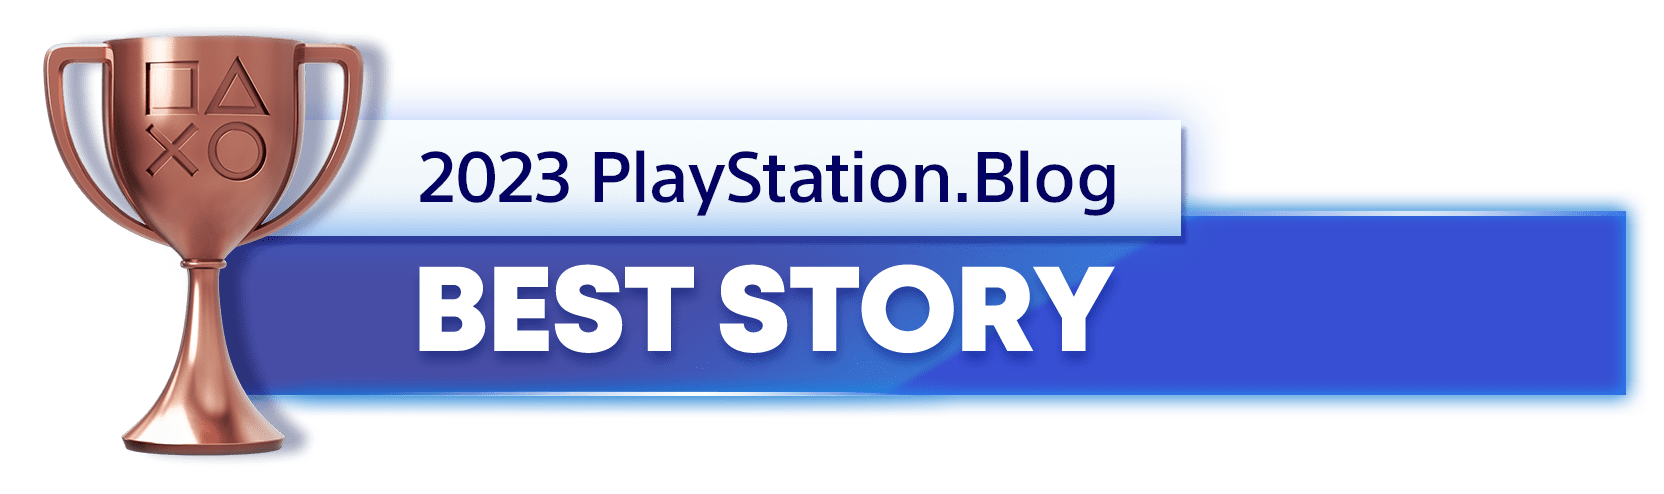 Bronze Trophy for the 2023 PlayStation Blog Best Story Winner